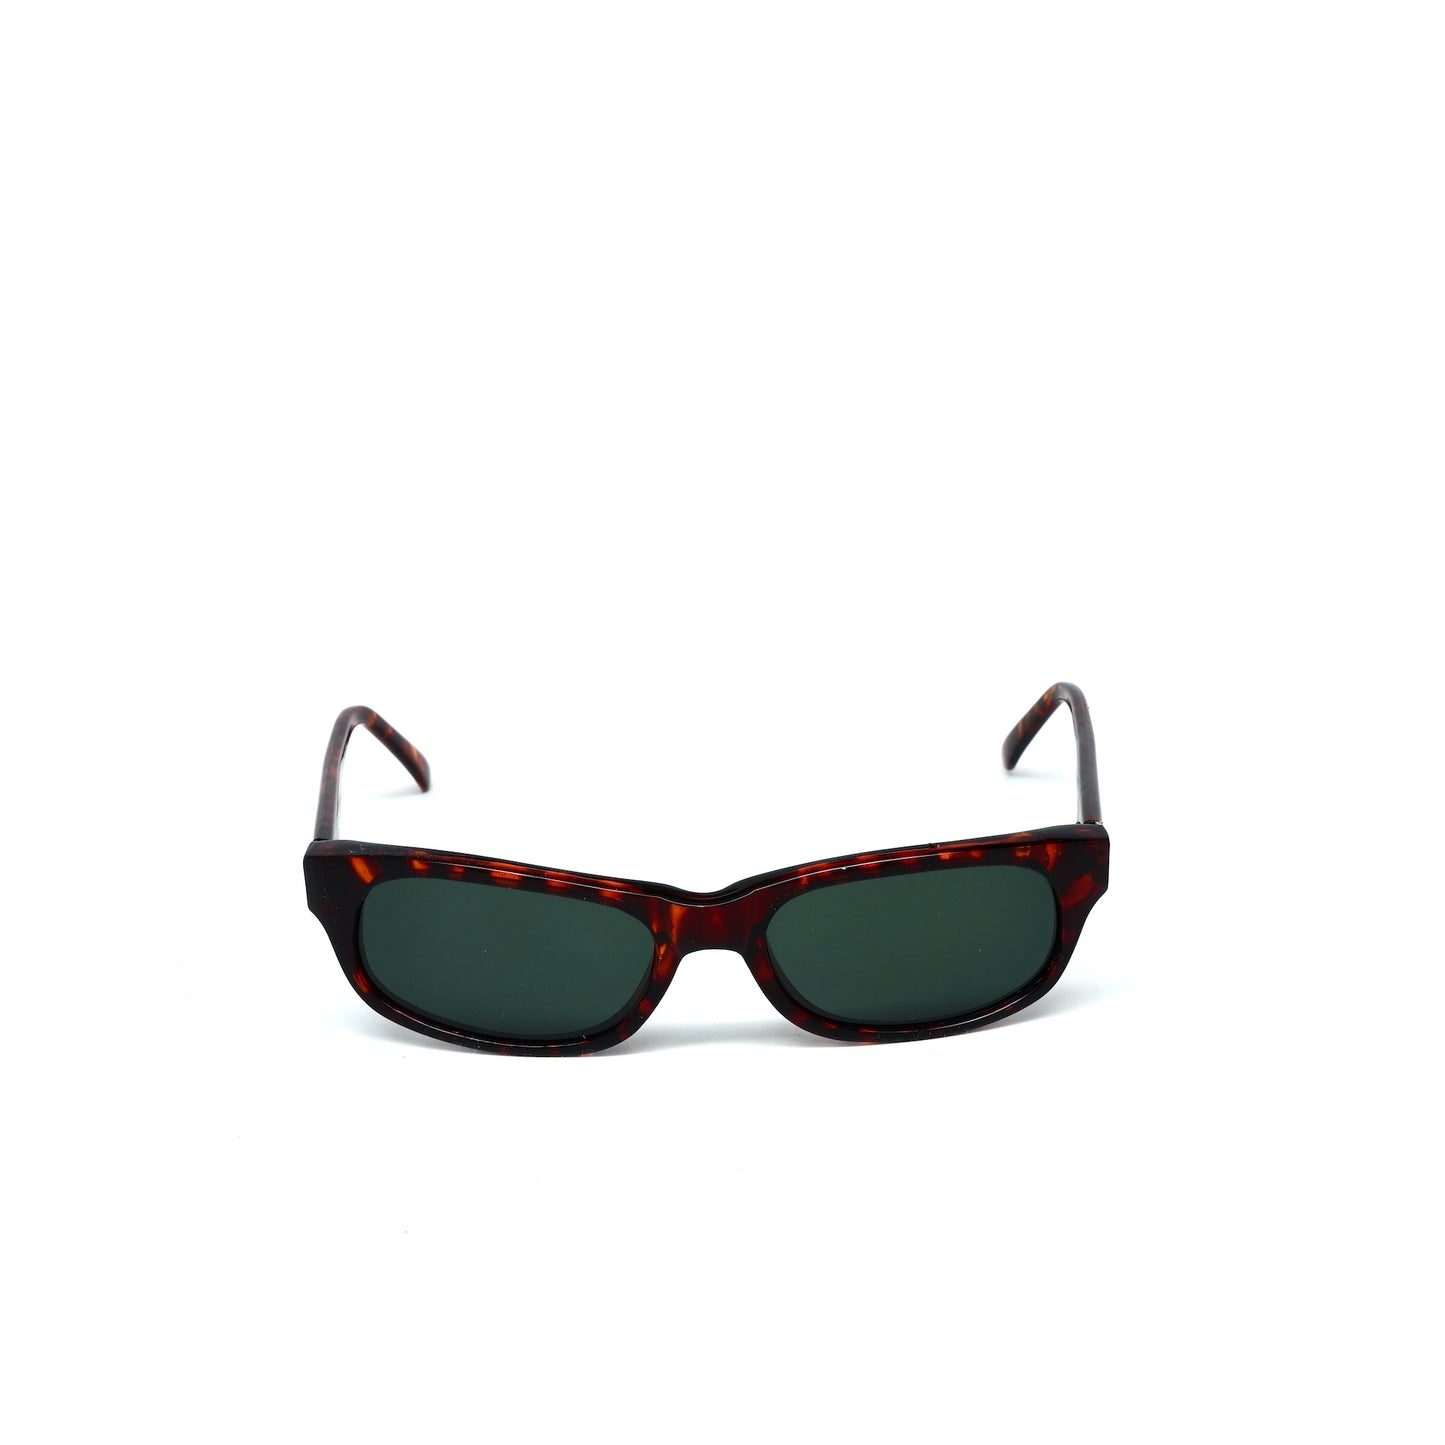 Vintage Small Size Rectangle Frame Slim Narrow Sunglasses - Tortoise